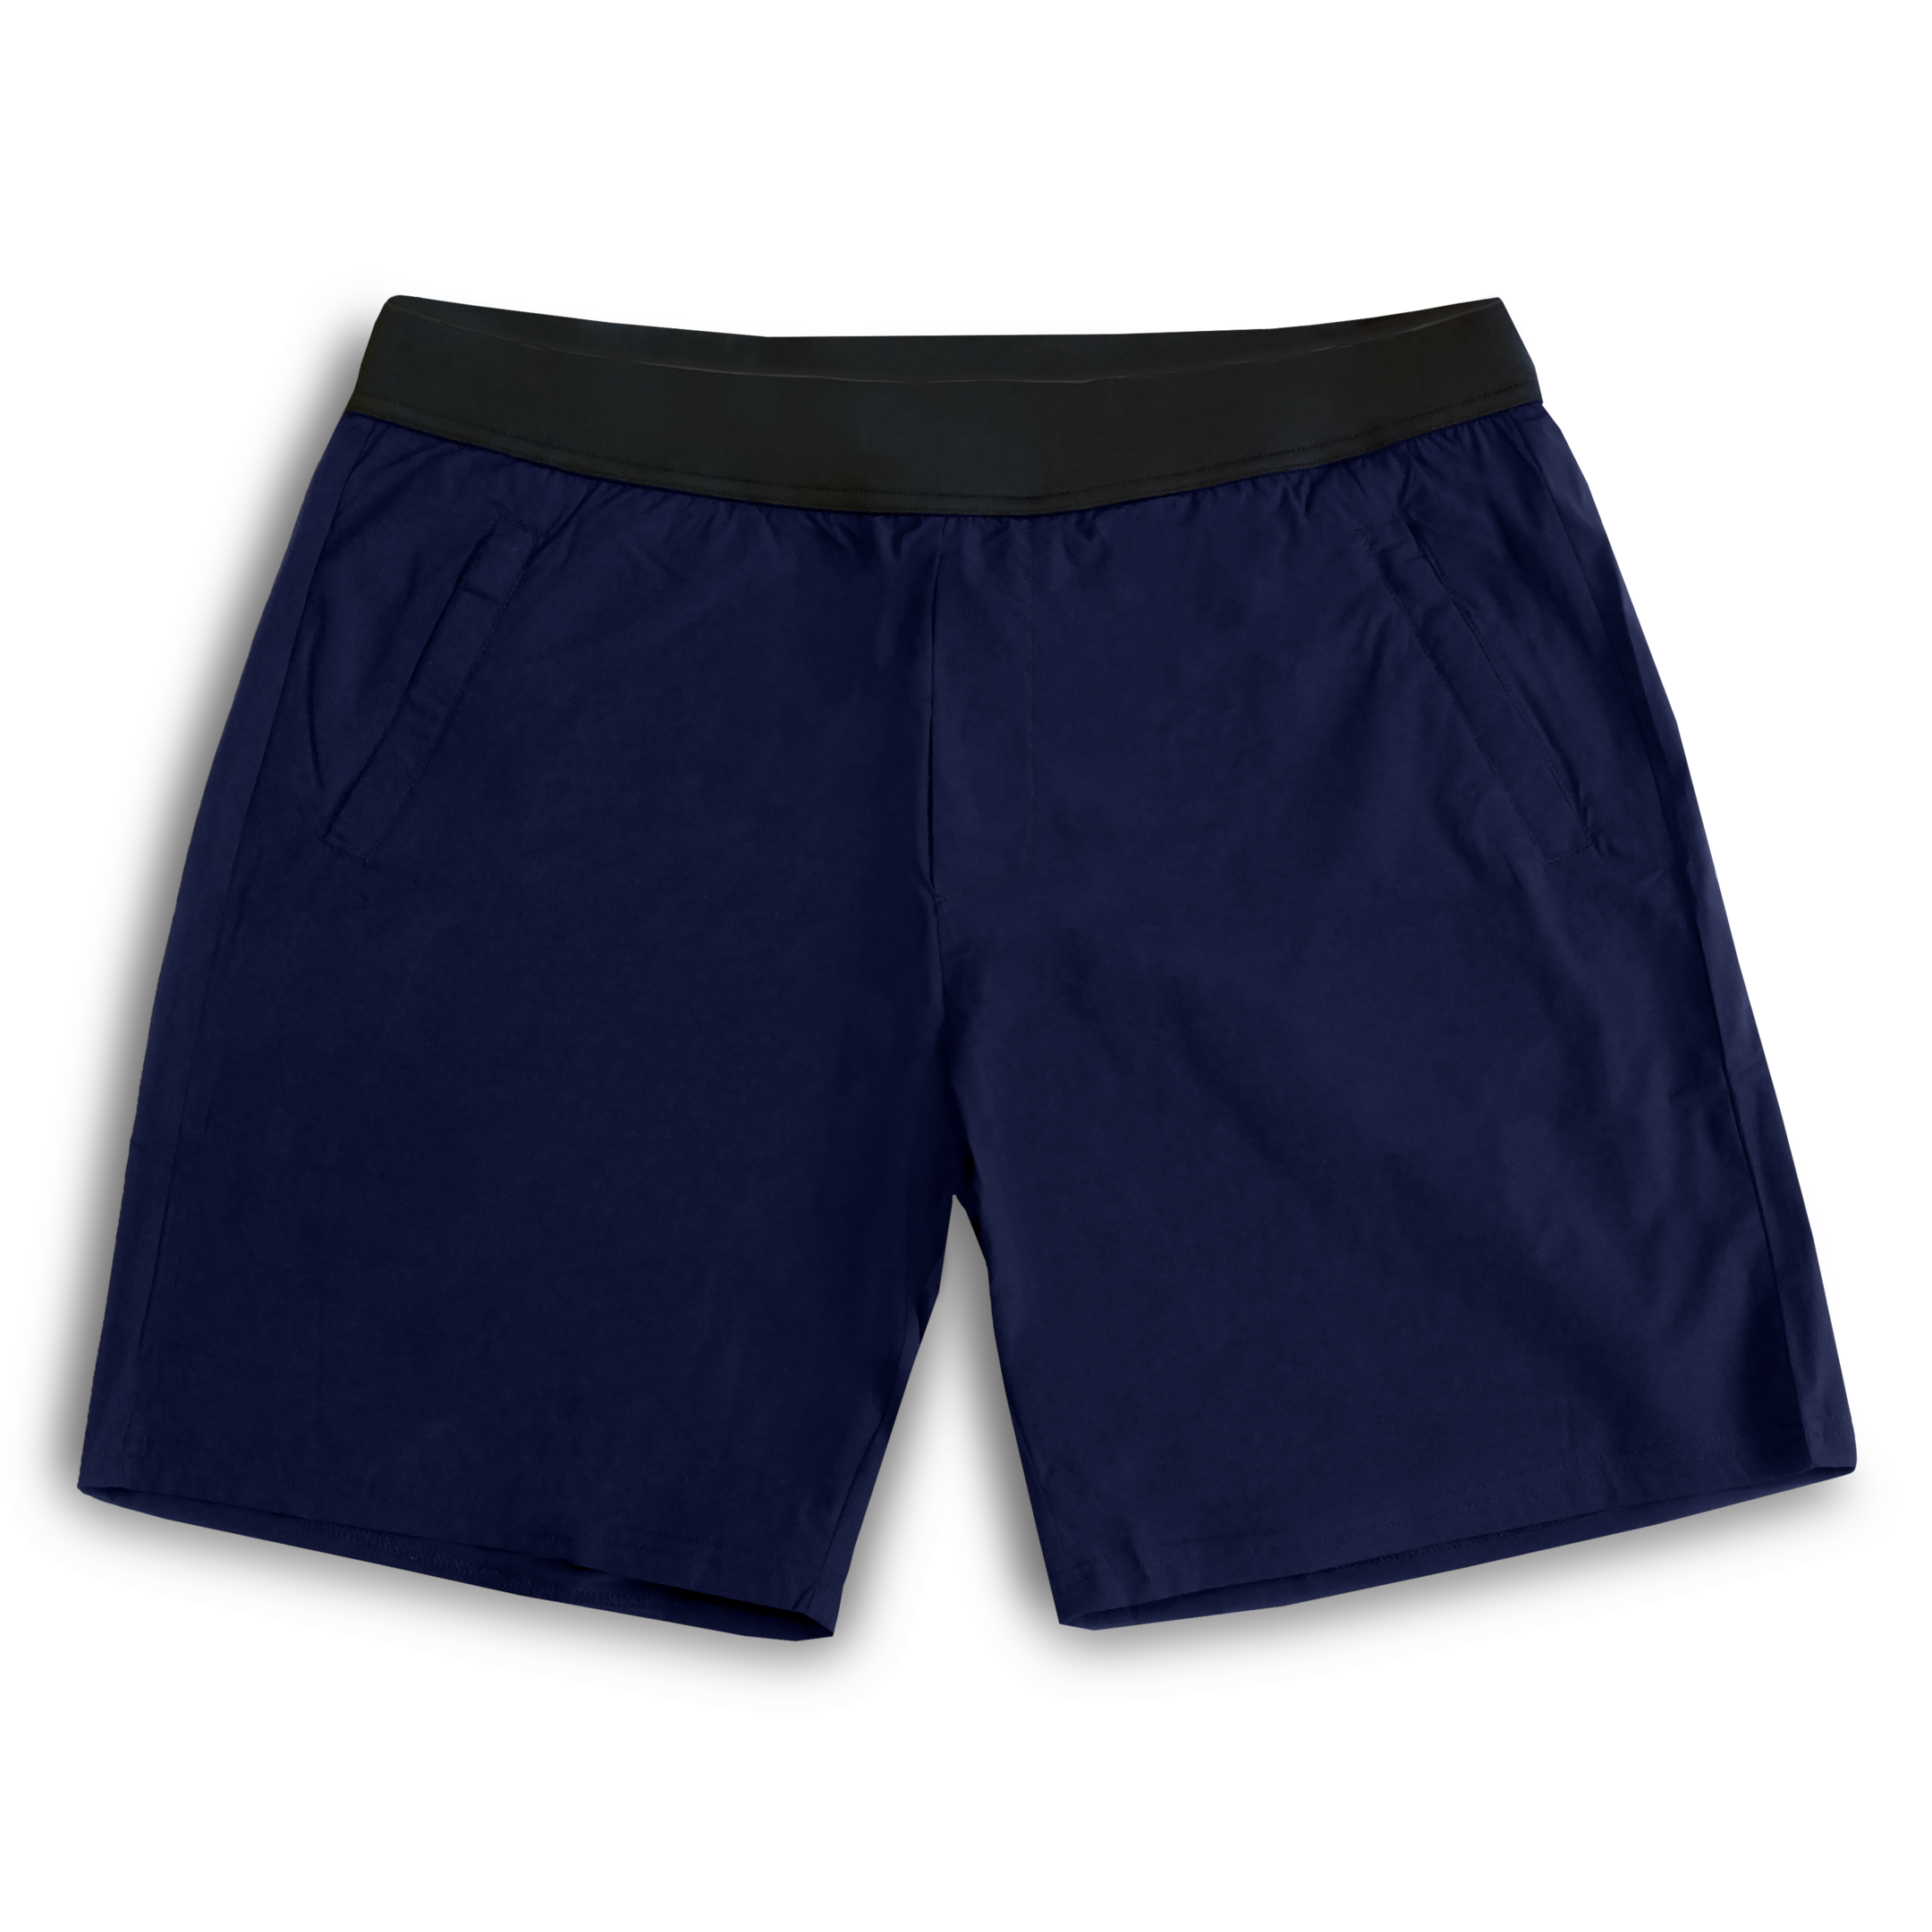 Perfect Men's Workout Shorts? Reviewing Lululemon Pace Breaker & T.H.E.  Shorts, Plus An Alternative 